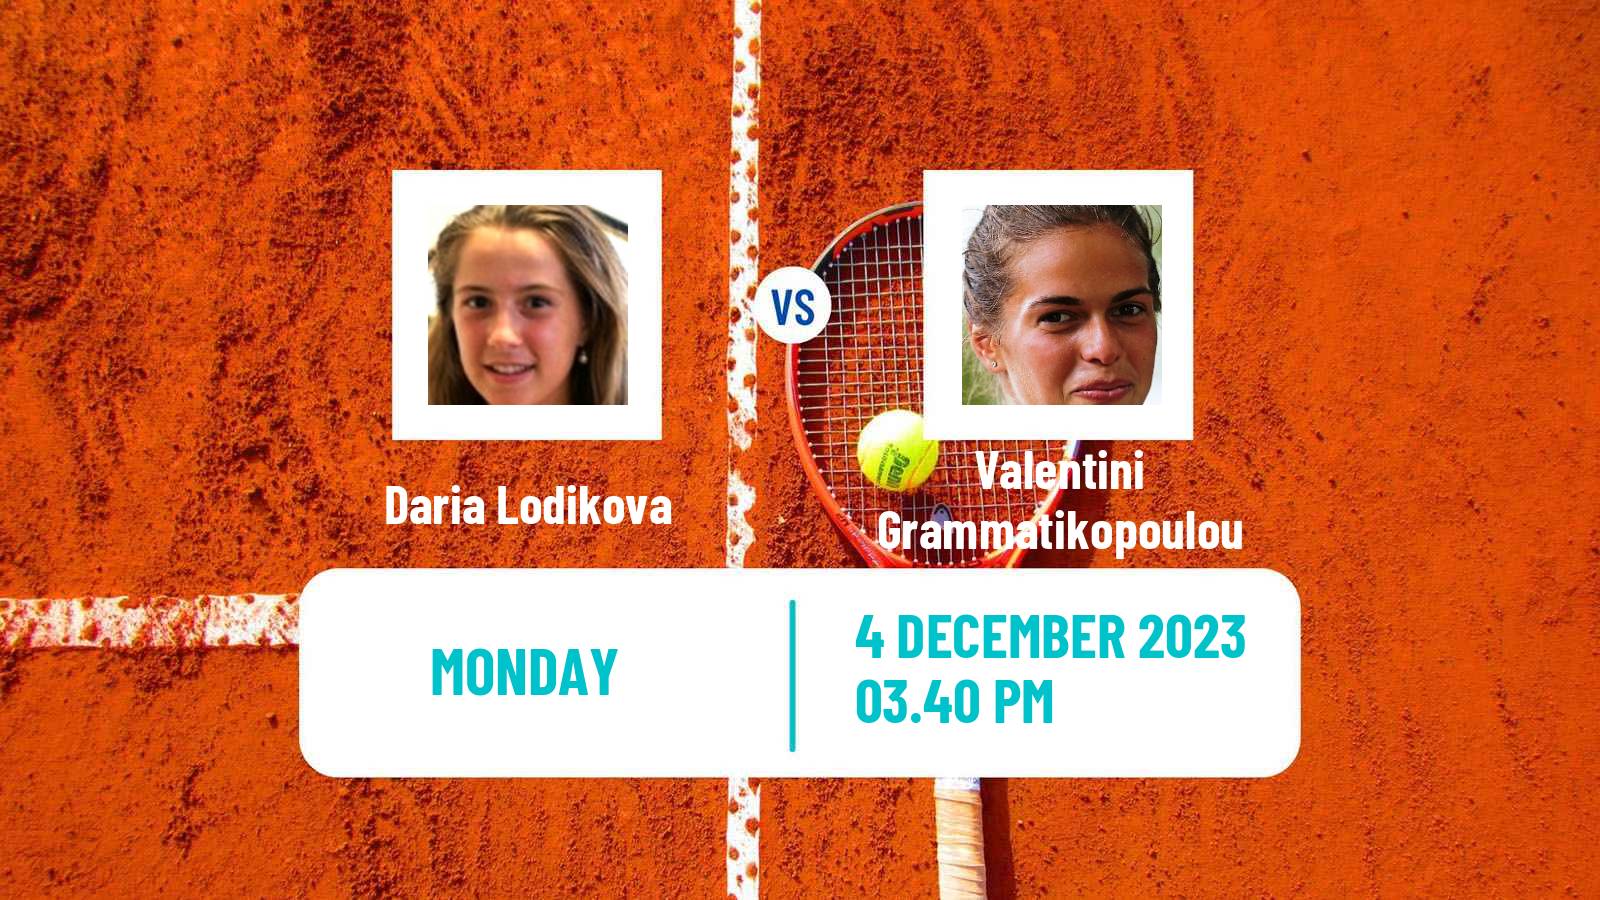 Tennis Montevideo Challenger Women Daria Lodikova - Valentini Grammatikopoulou